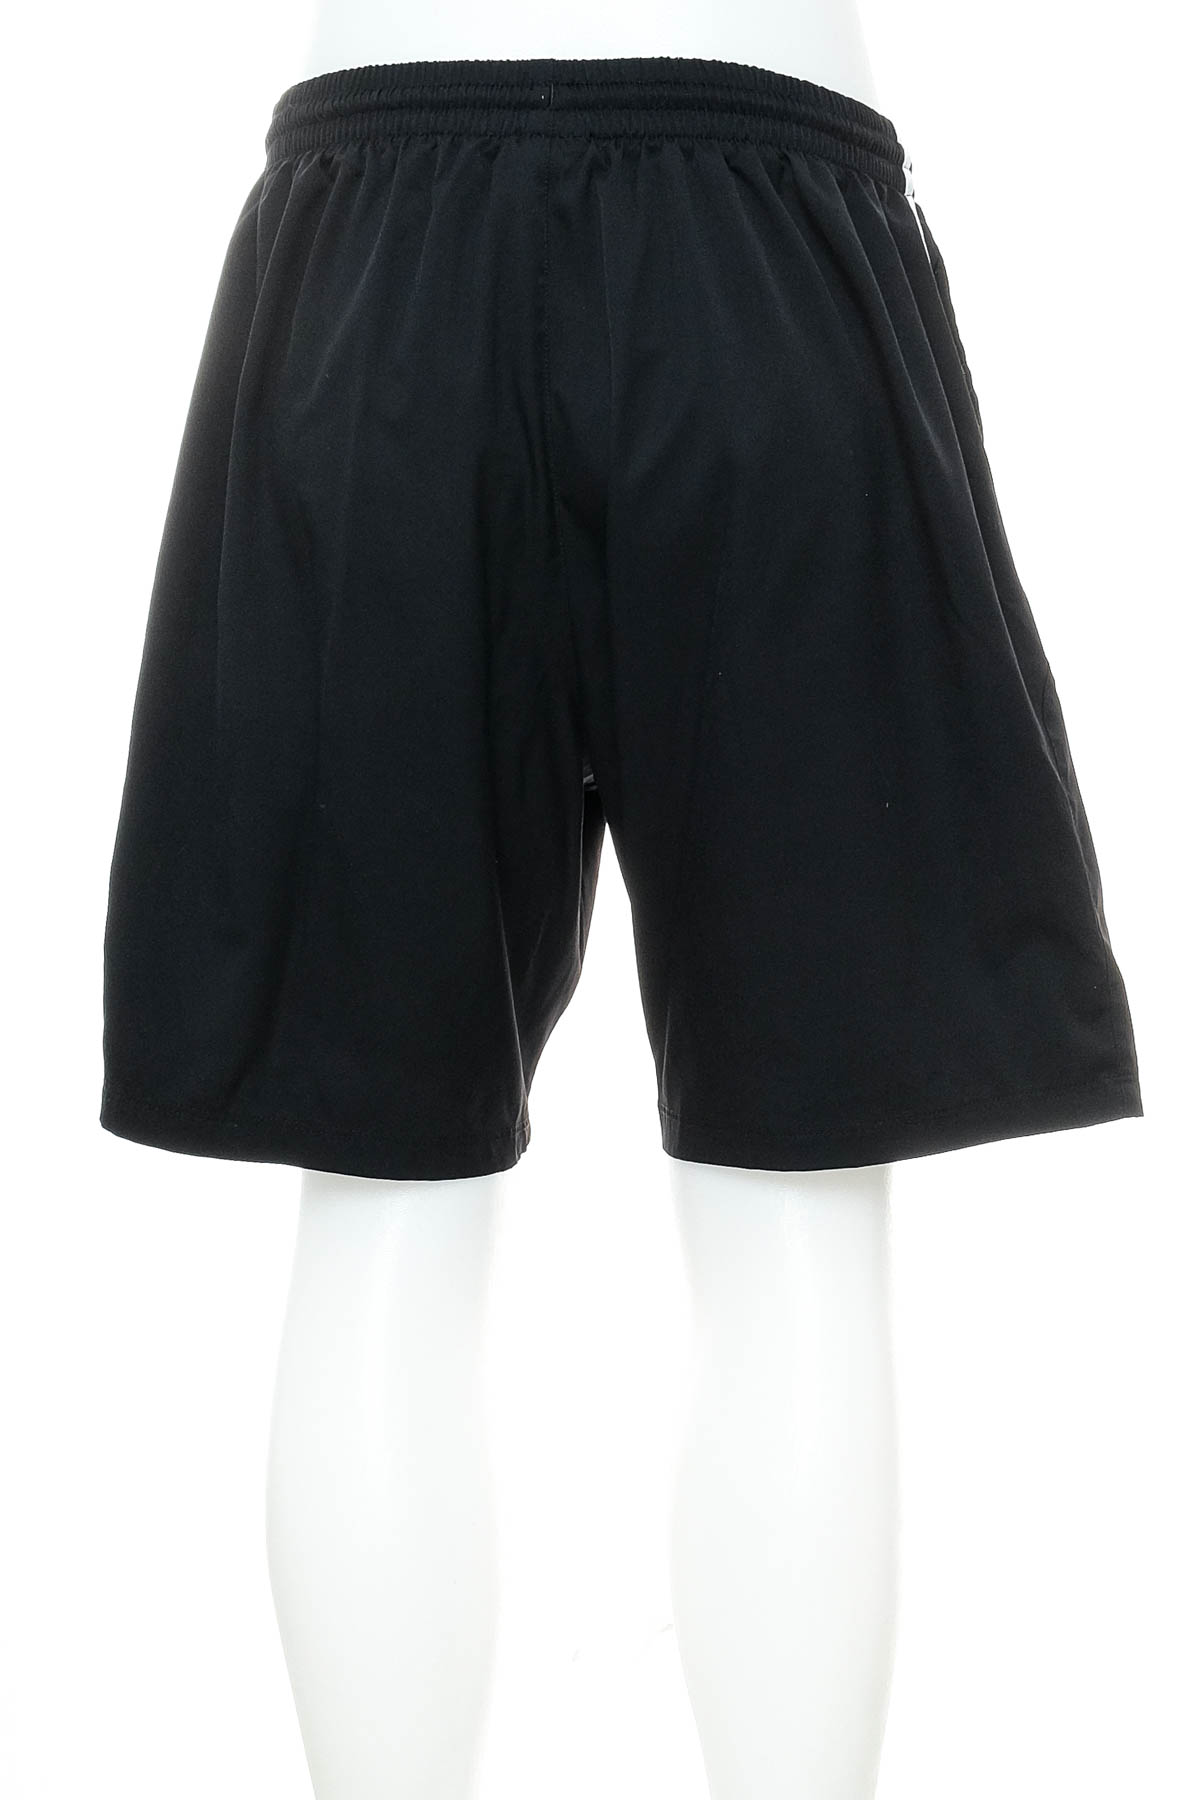 Men's shorts - Jako - 1